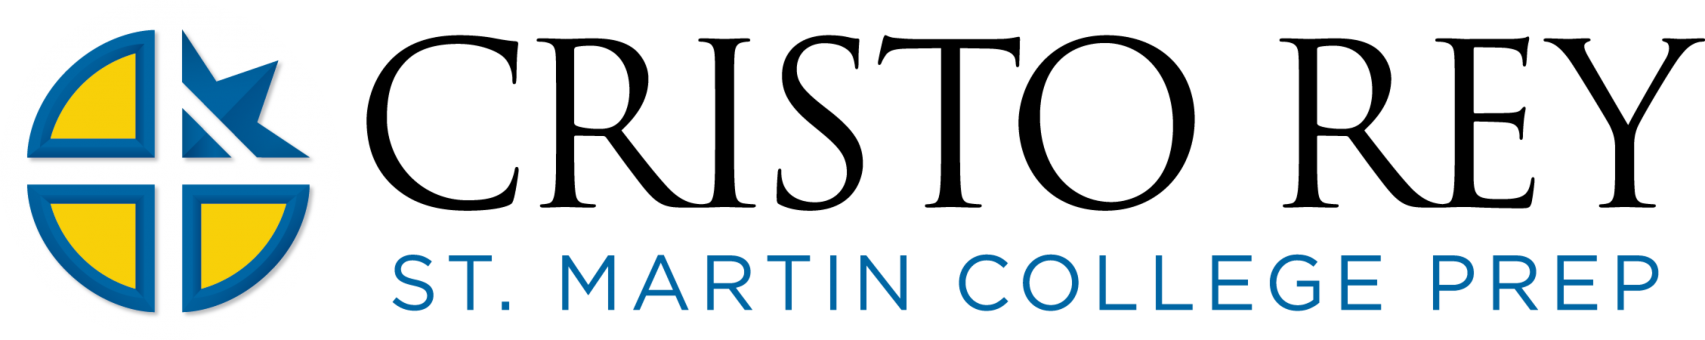 Cristo Rey St. Martin logo